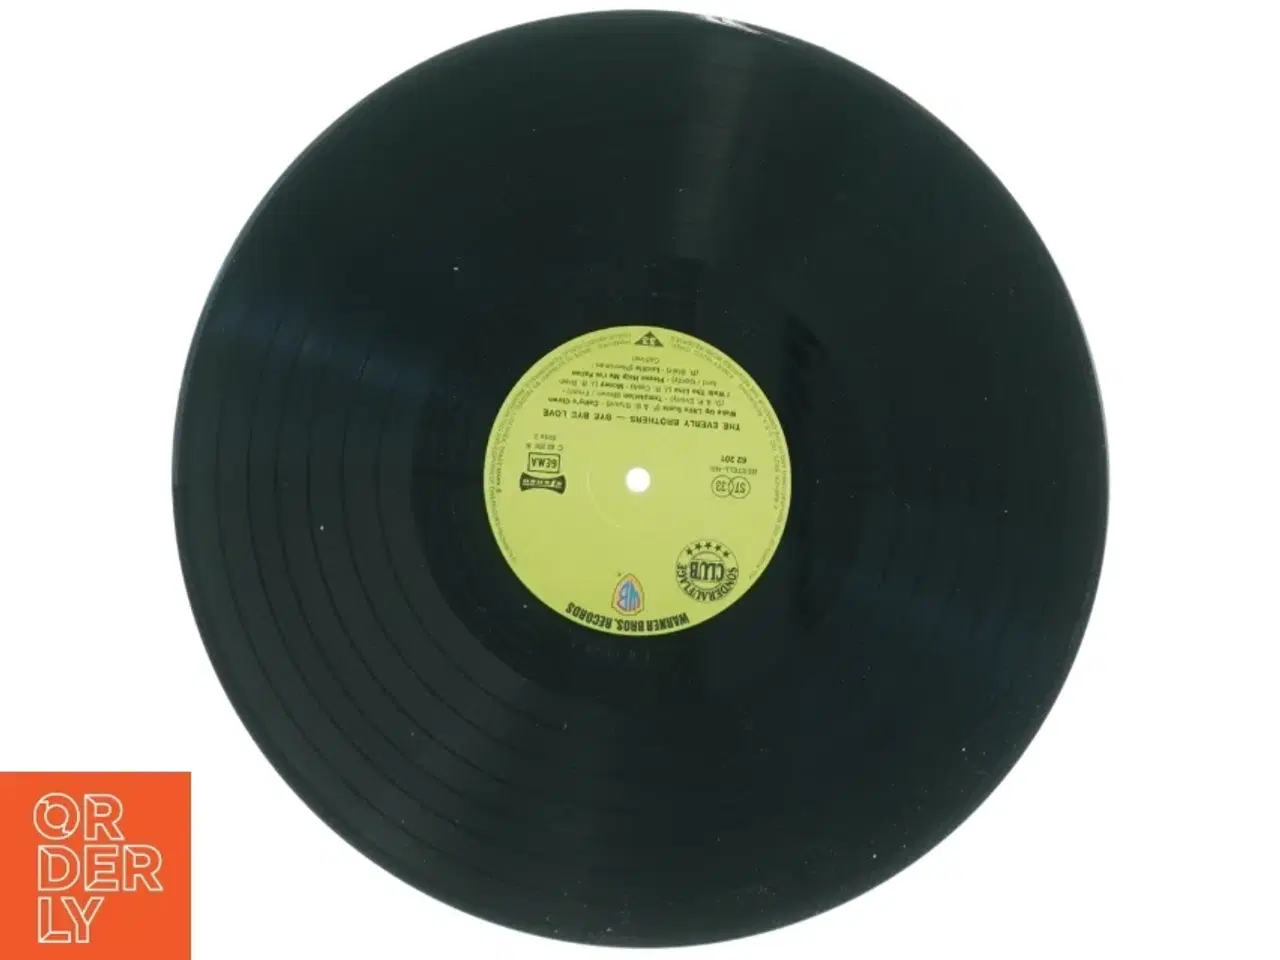 Billede 3 - The Everly Brothers - Bye Bye Love vinylplade fra Warner Bros. (str. 31 x 31 cm)